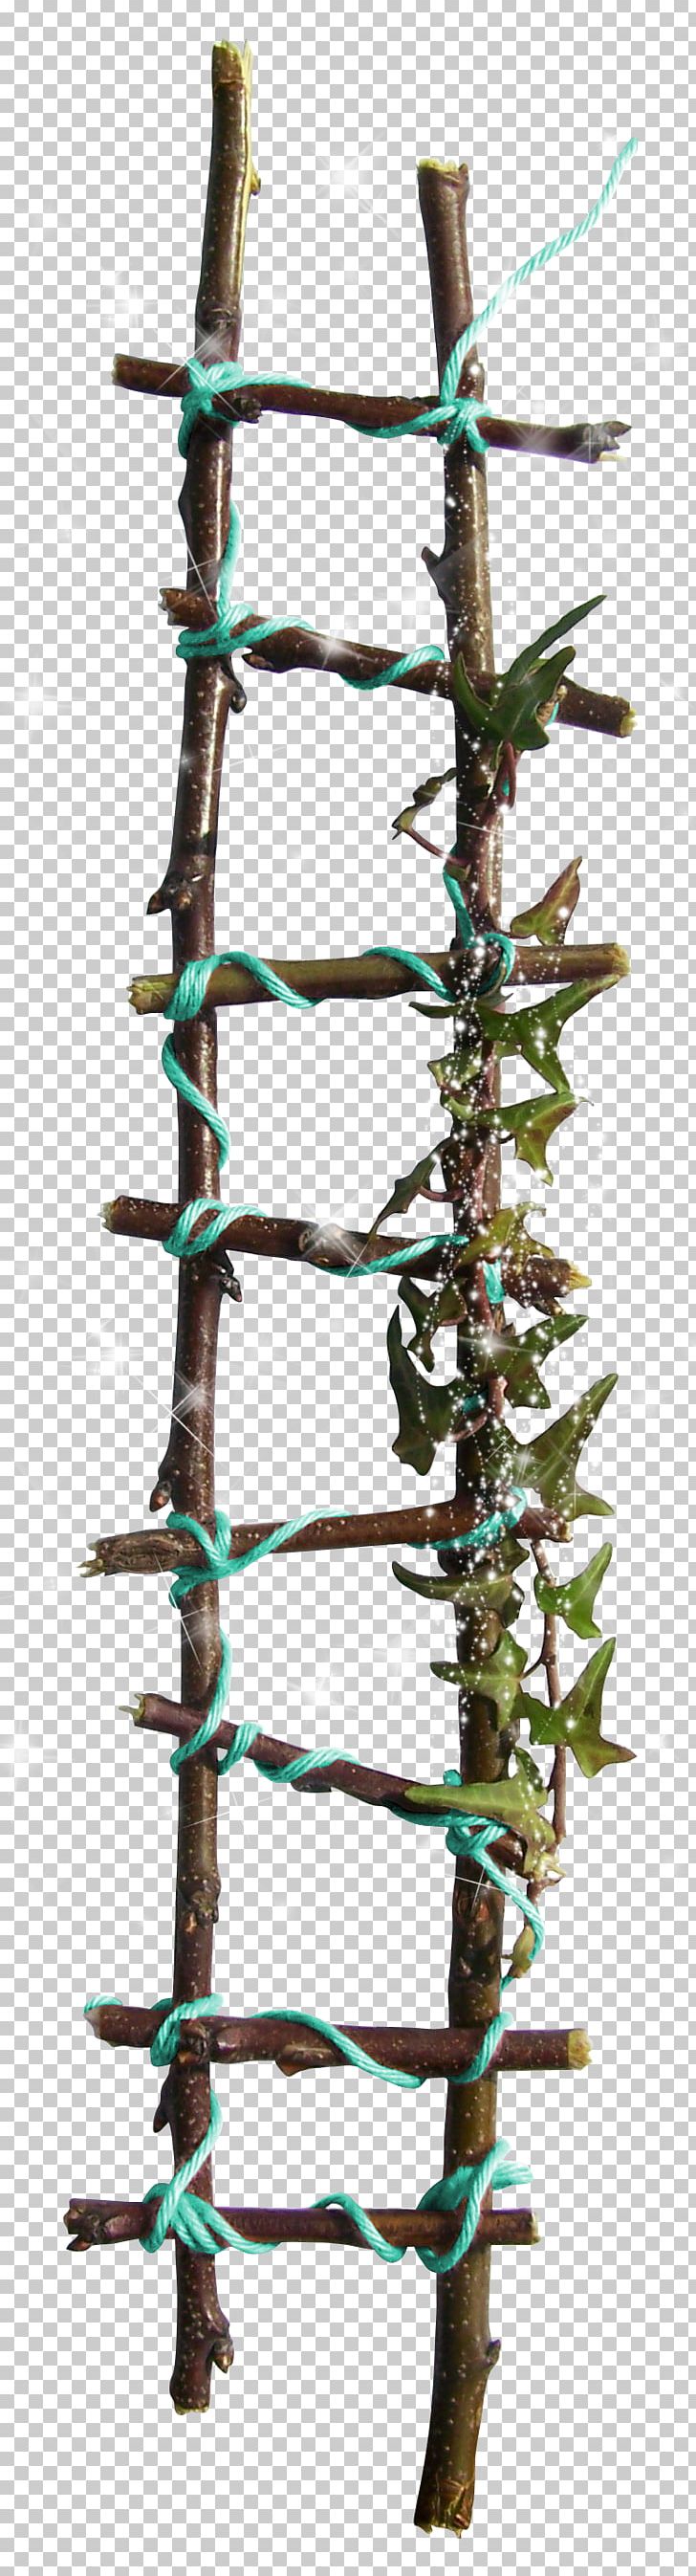 Twig Branch Plant Stem Tree Organism PNG, Clipart, Branch, Ladder, Nature, Organism, Plant Stem Free PNG Download